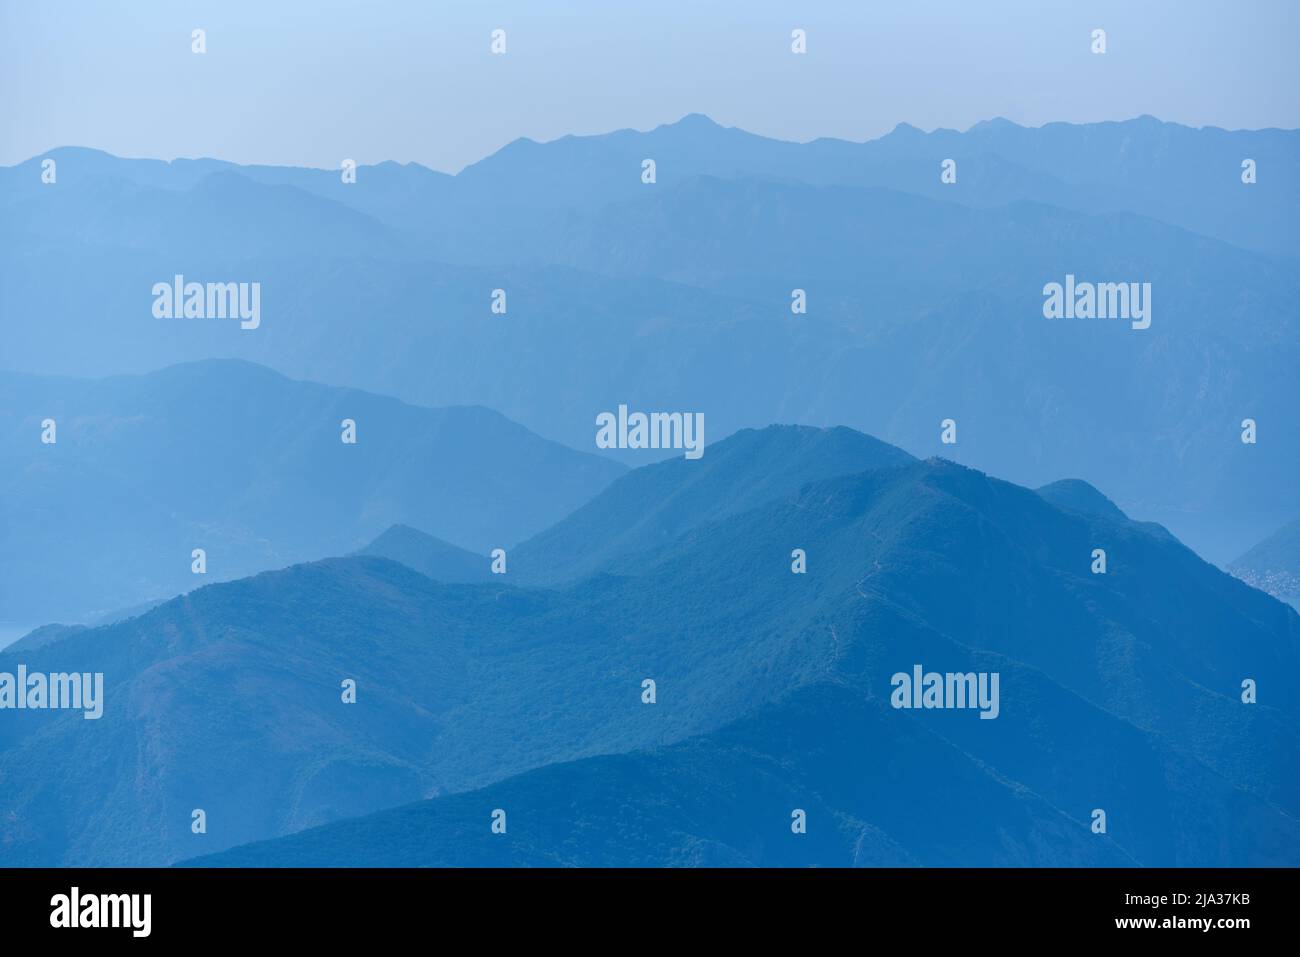 Blue mountain range silhouette with morning haze Stock Photo